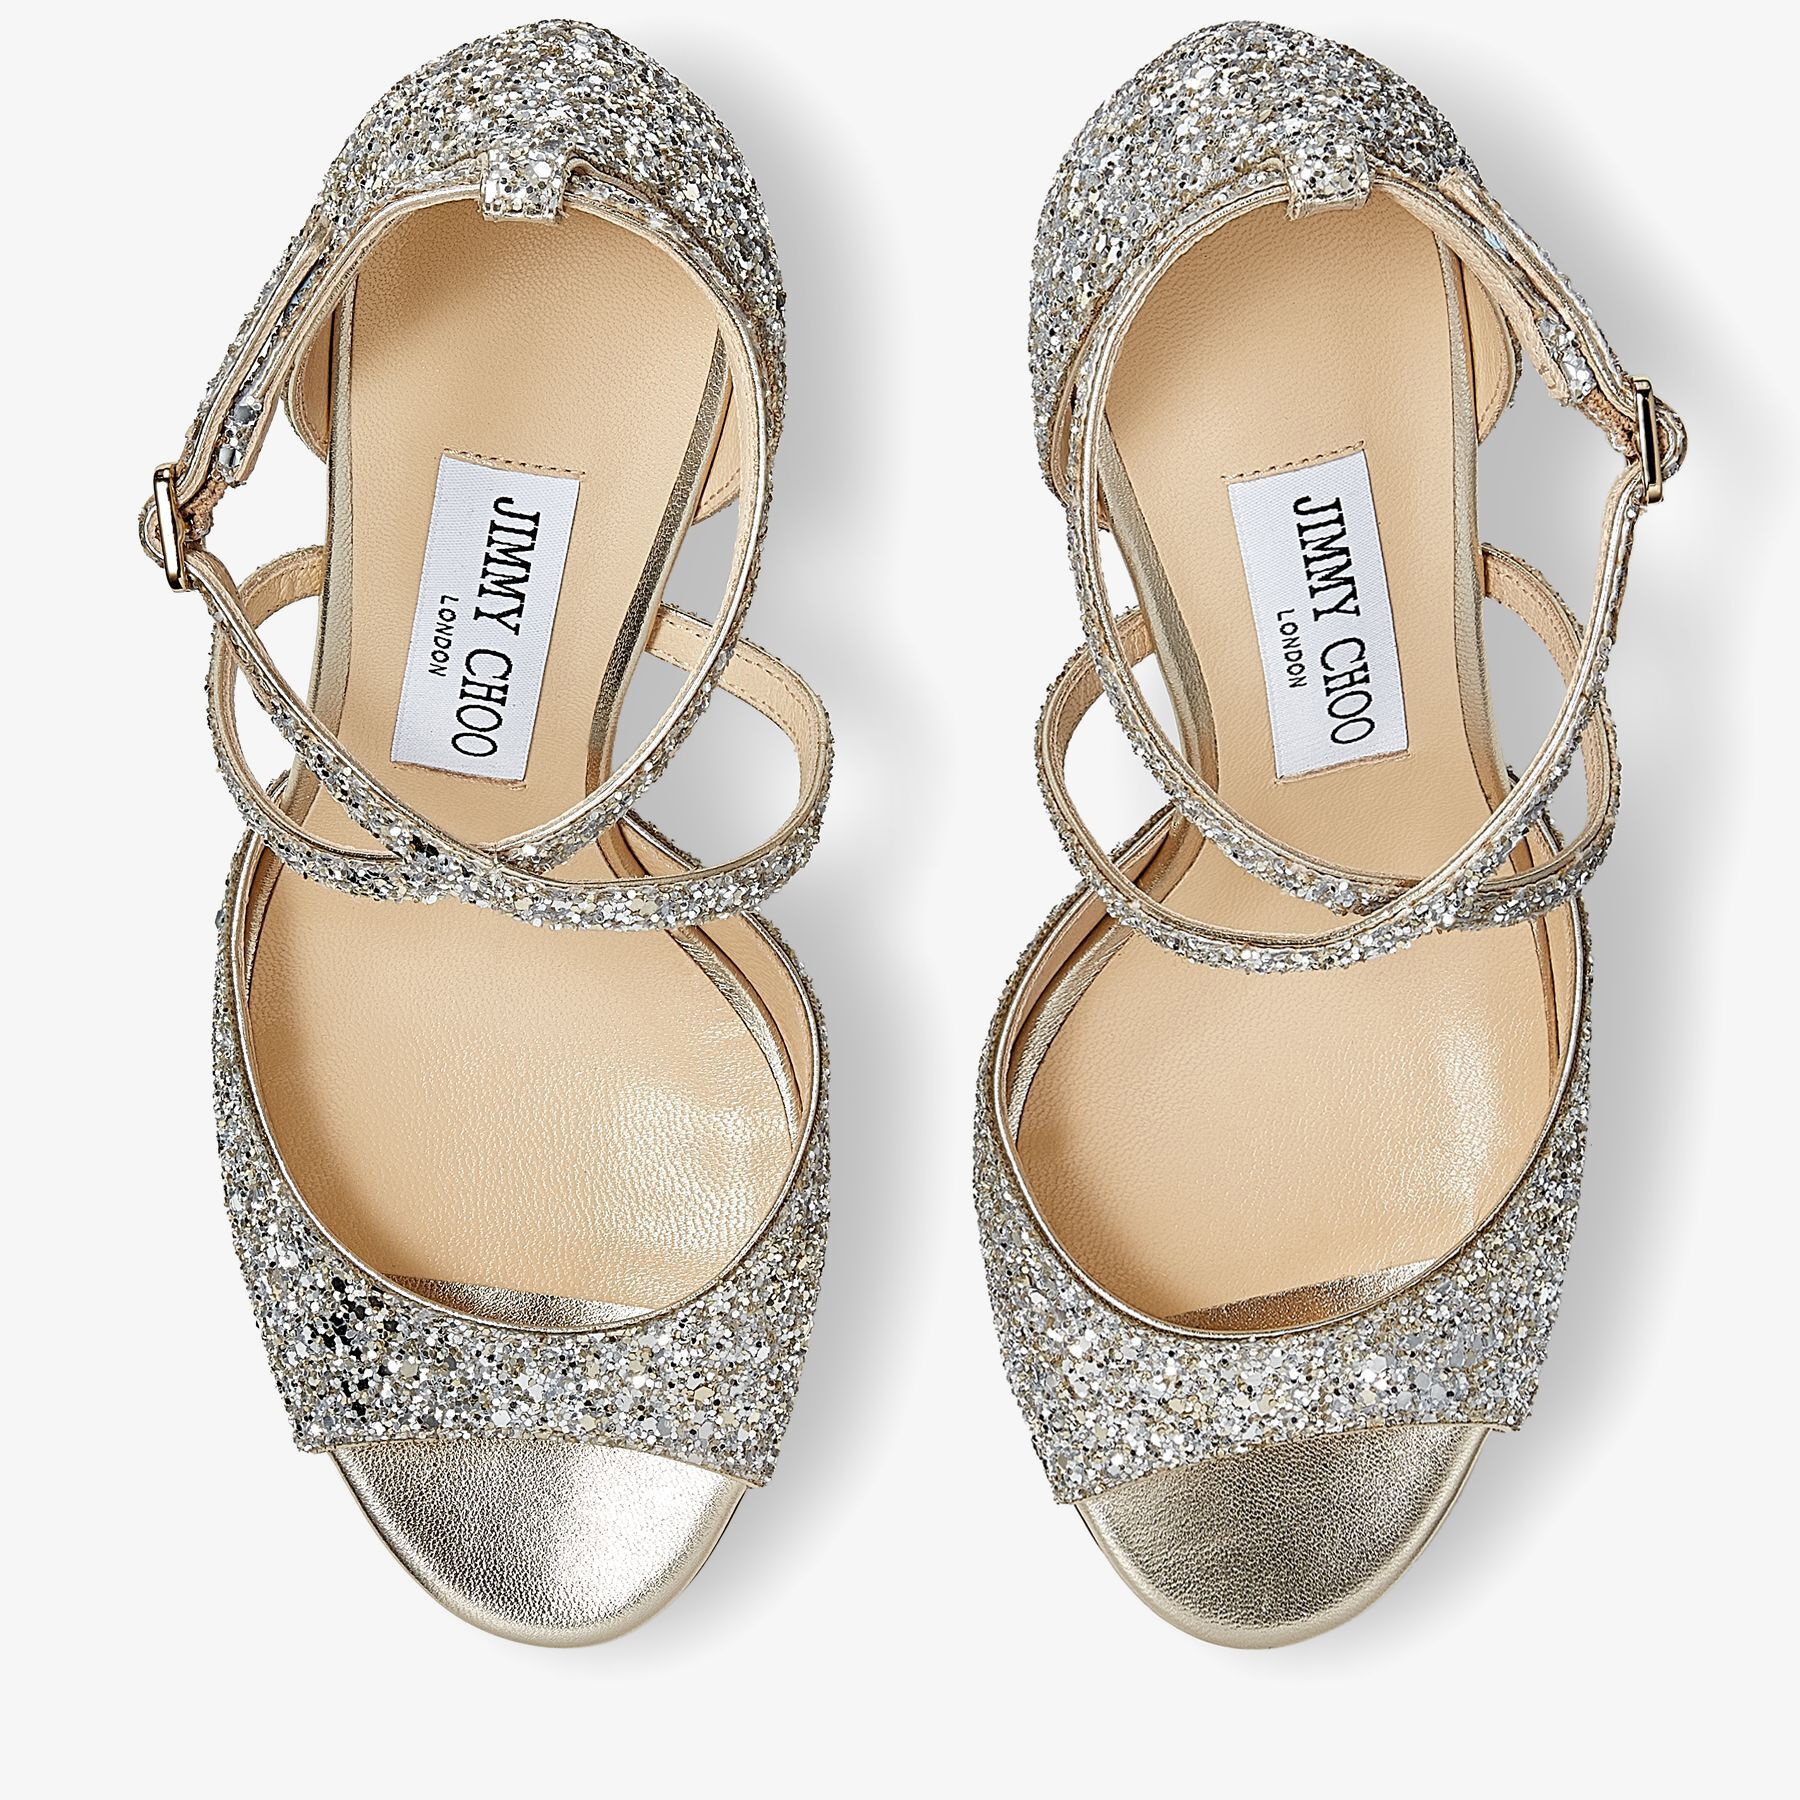 Emsy 85
Champagne Coarse Glitter Fabric Sandals with Crossover Straps - 5